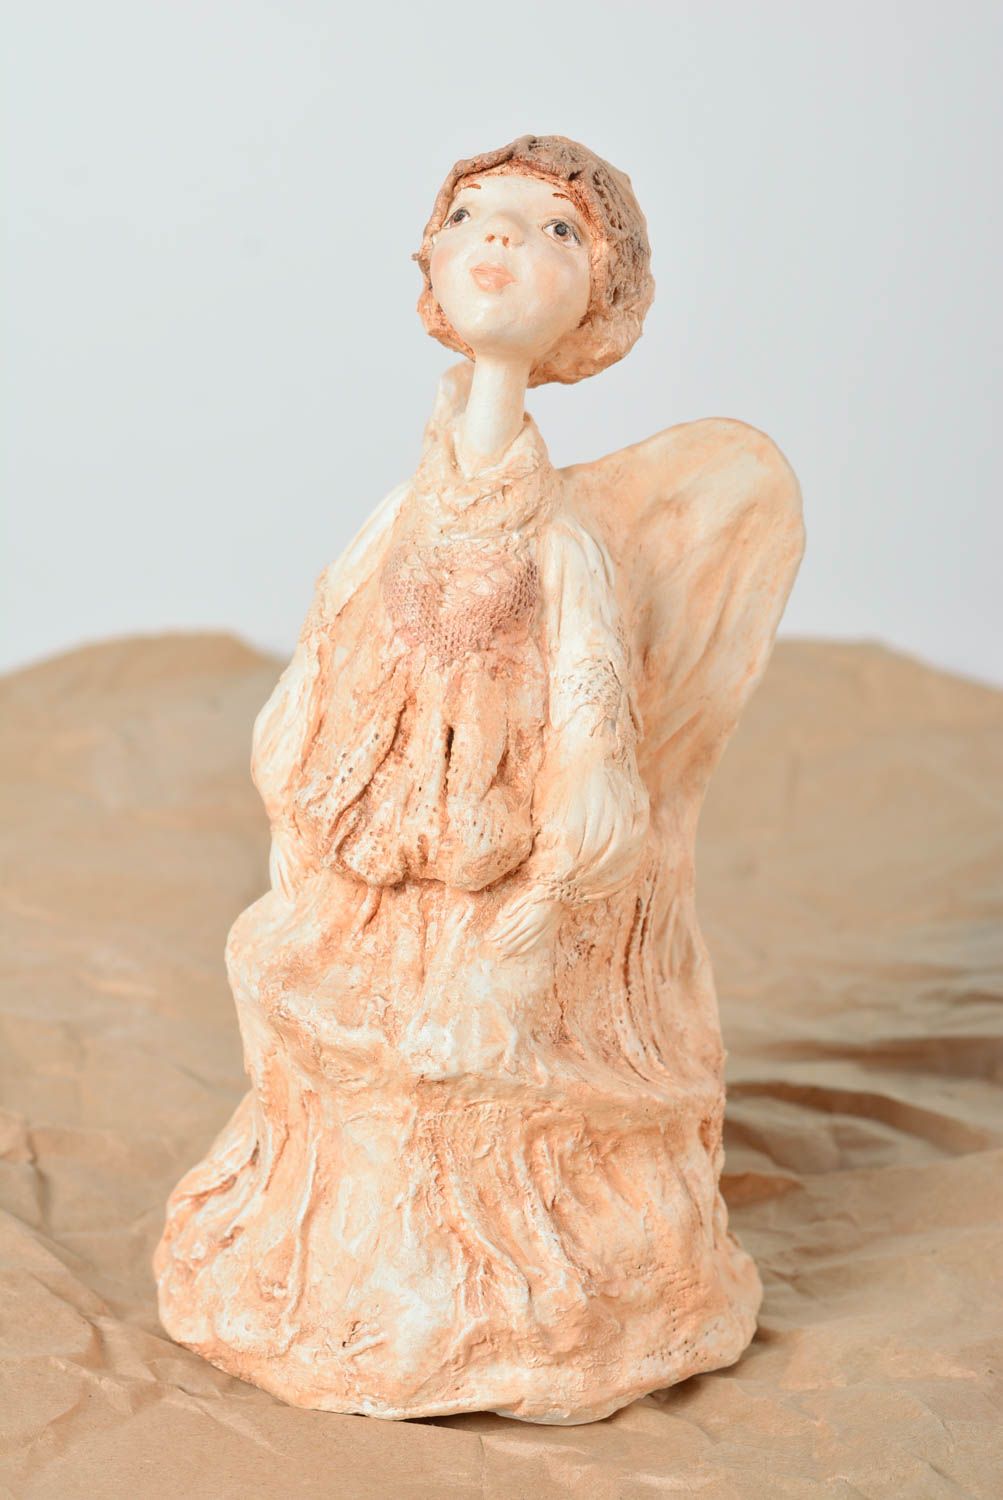 Handmade interior statuette clay figurine home decor ideas decorative use only photo 1